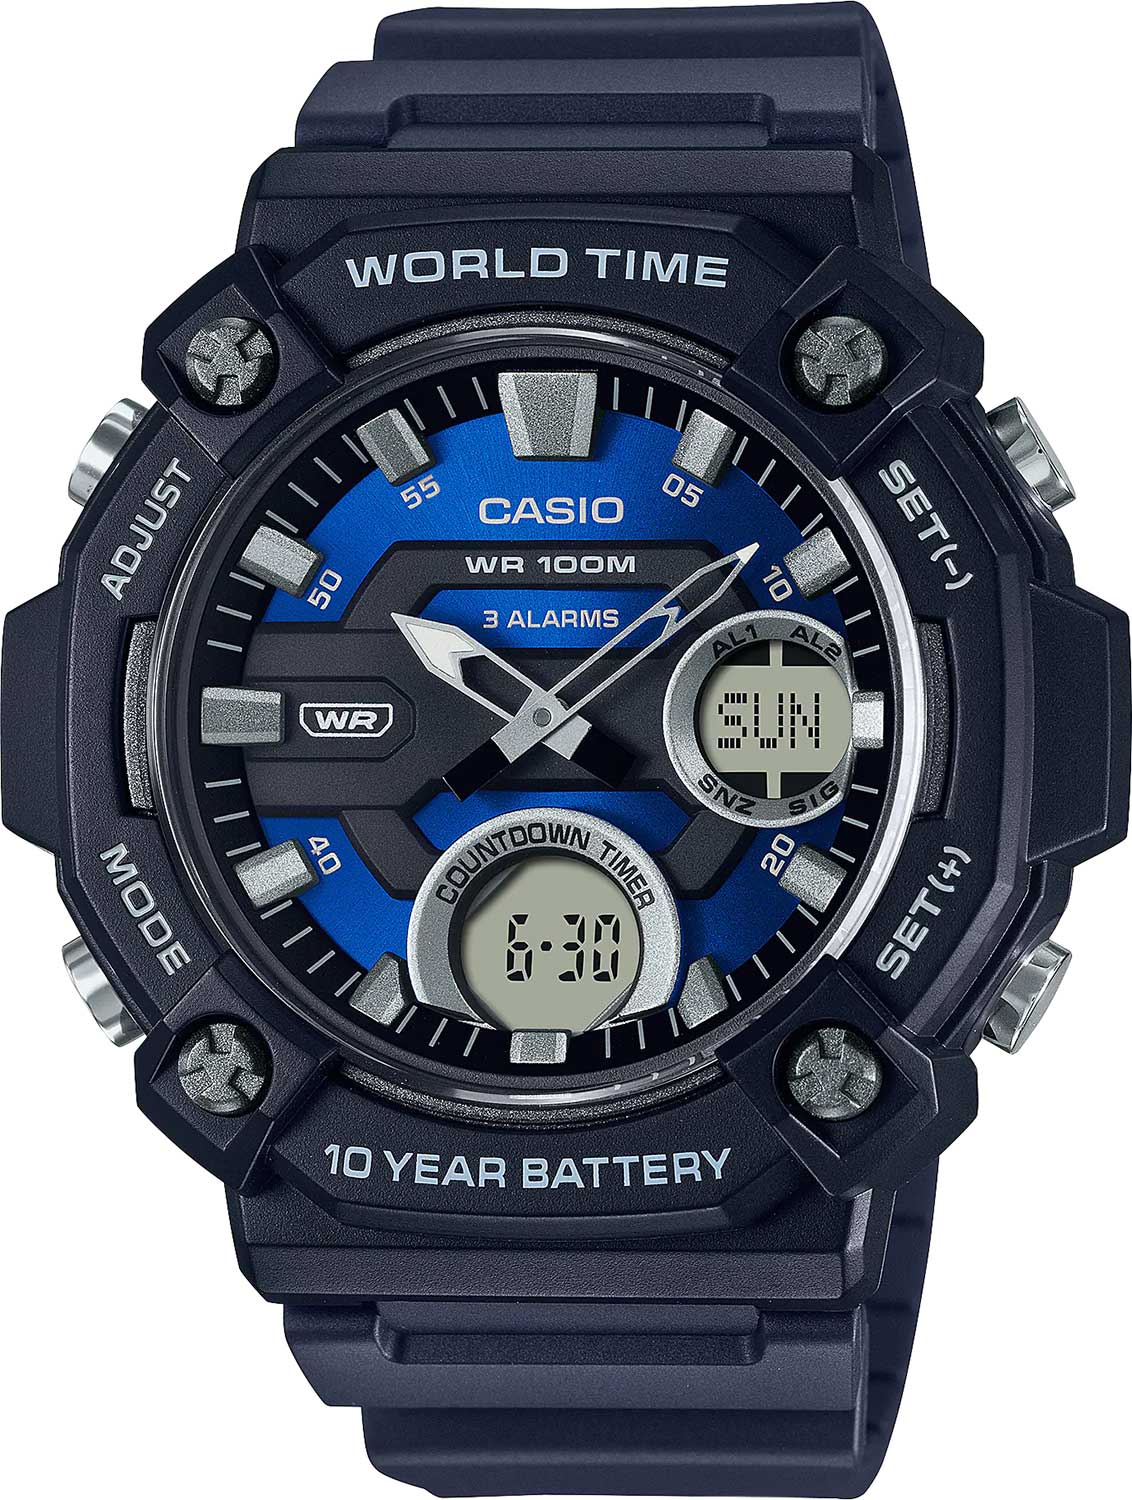 Наручные часы Casio AEQ-120W-2A наручные часы casio collection aeq 120w 2a синий черный